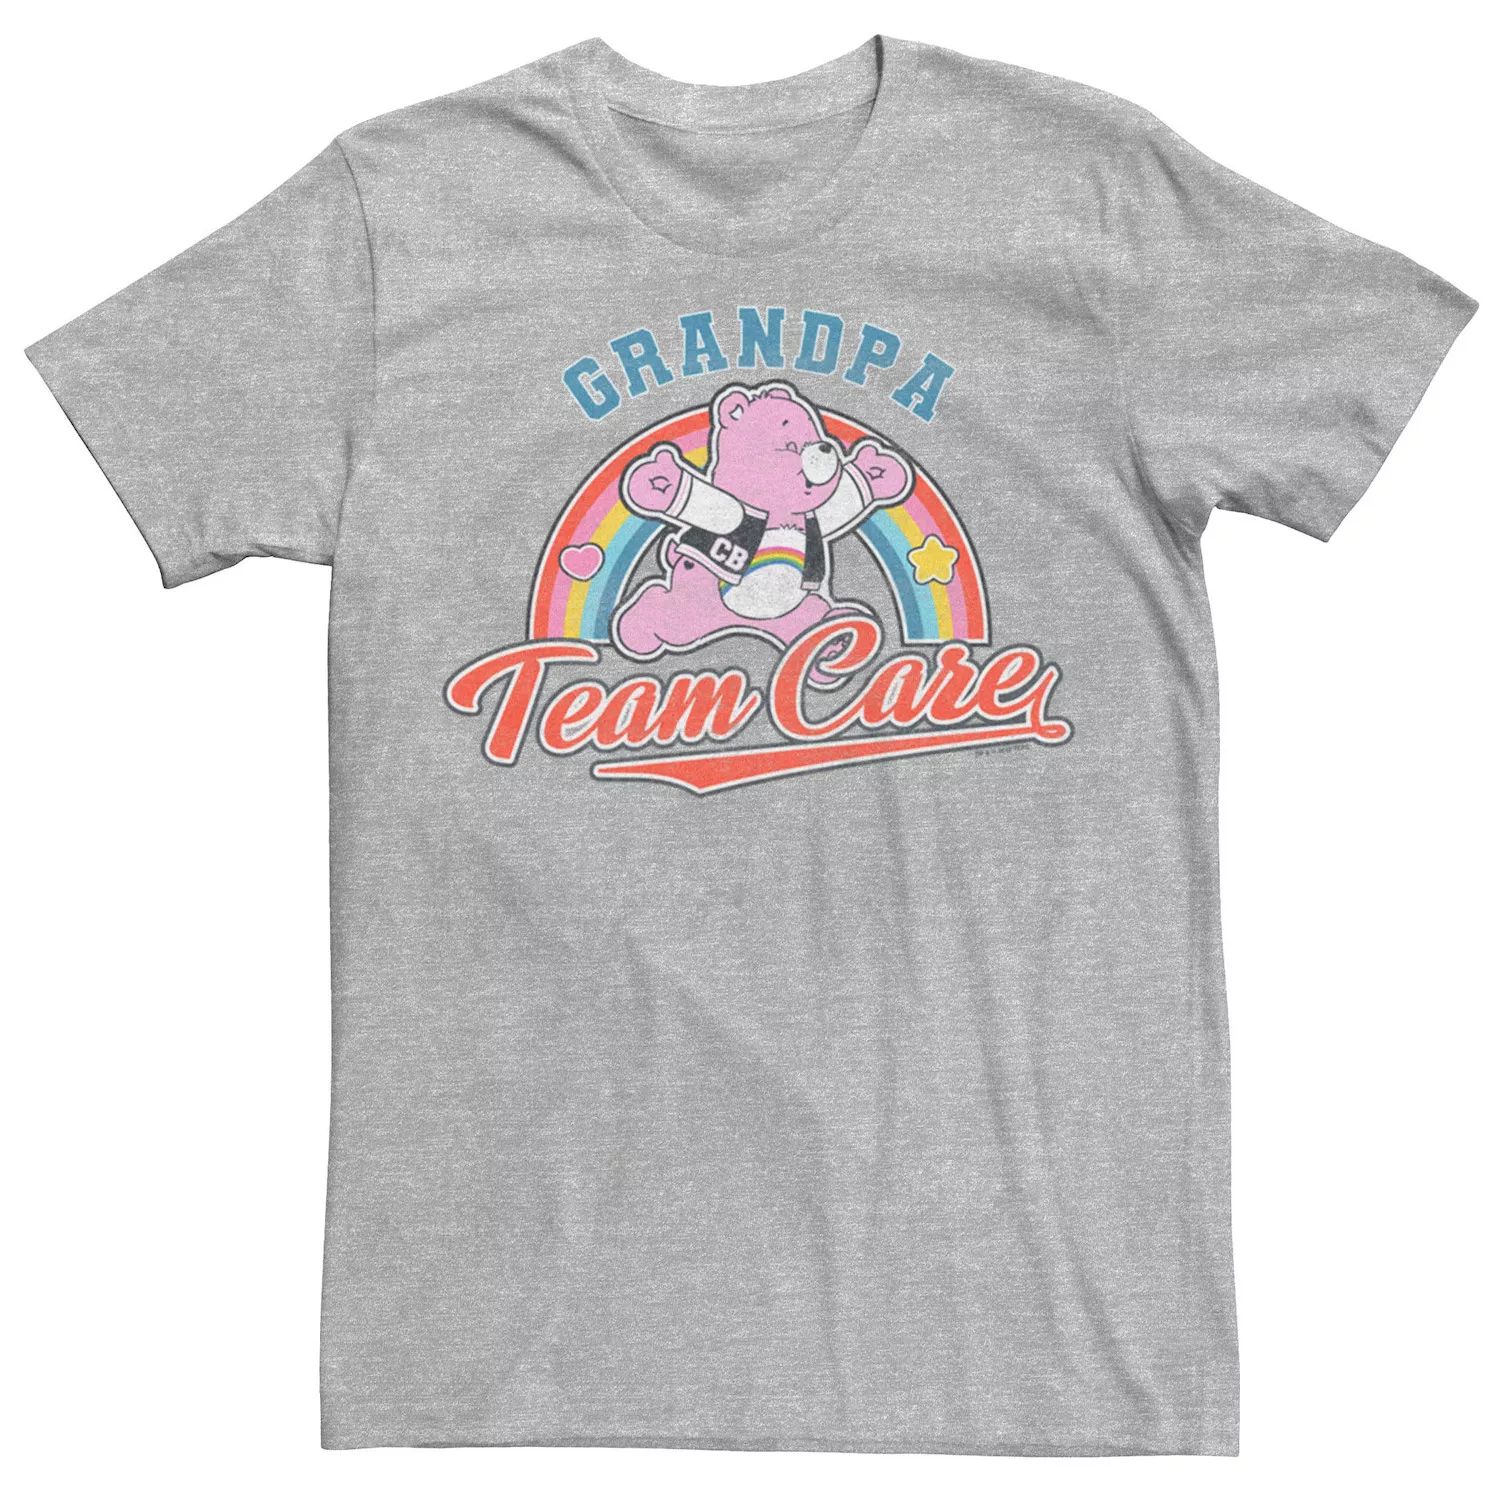 Мужская футболка с рисунком Care Bears Grandpa Team Care Licensed Character